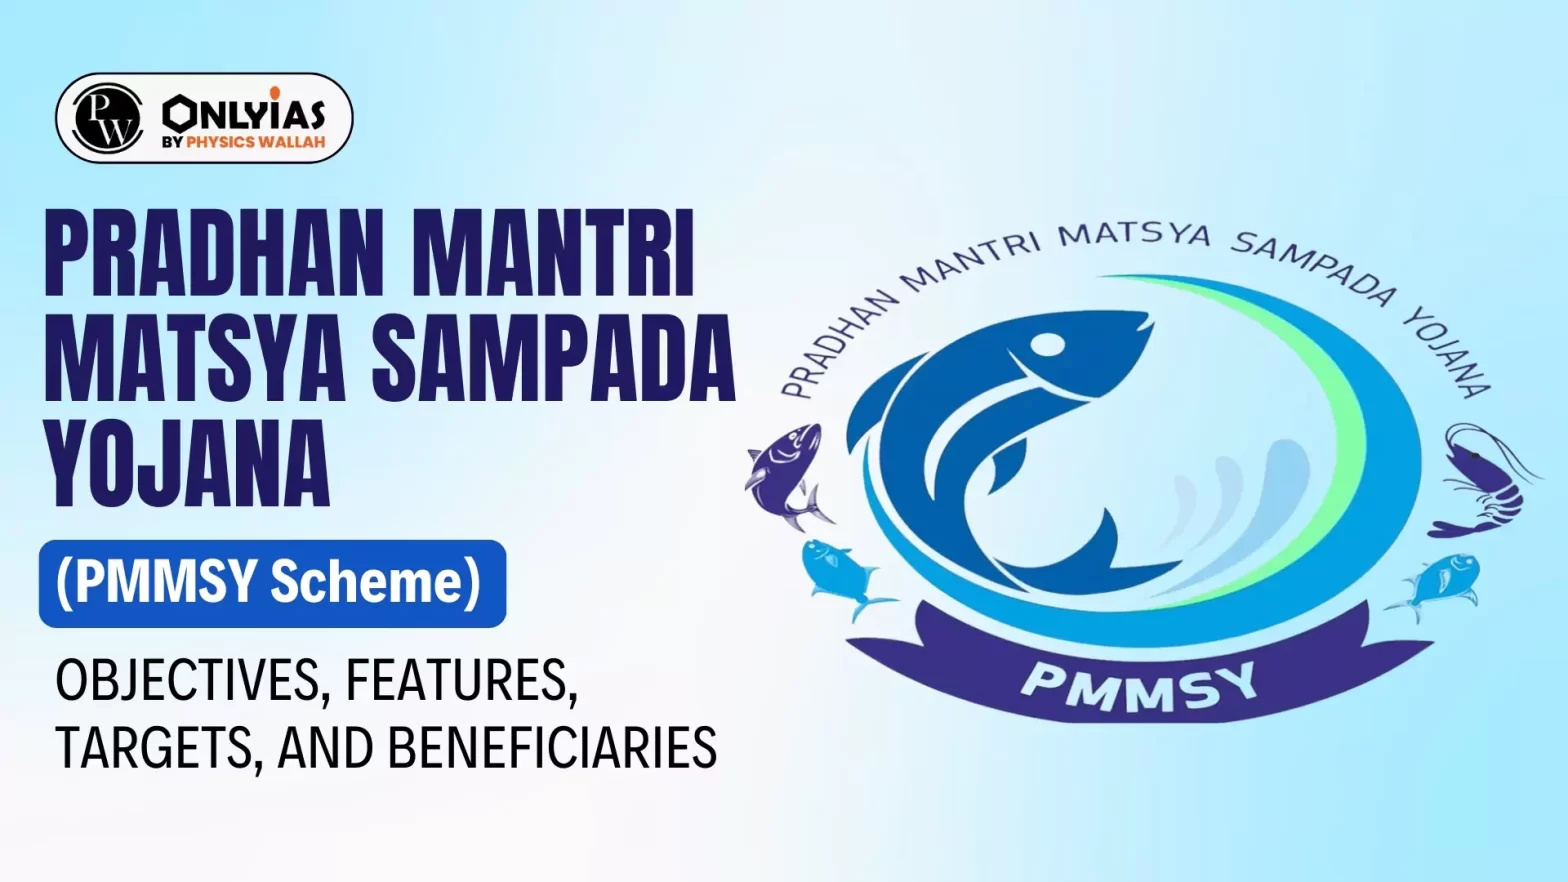 Pradhan Mantri Matsya Sampada Yojana (PMMSY Scheme): Objectives, Features, Targets, and Beneficiaries